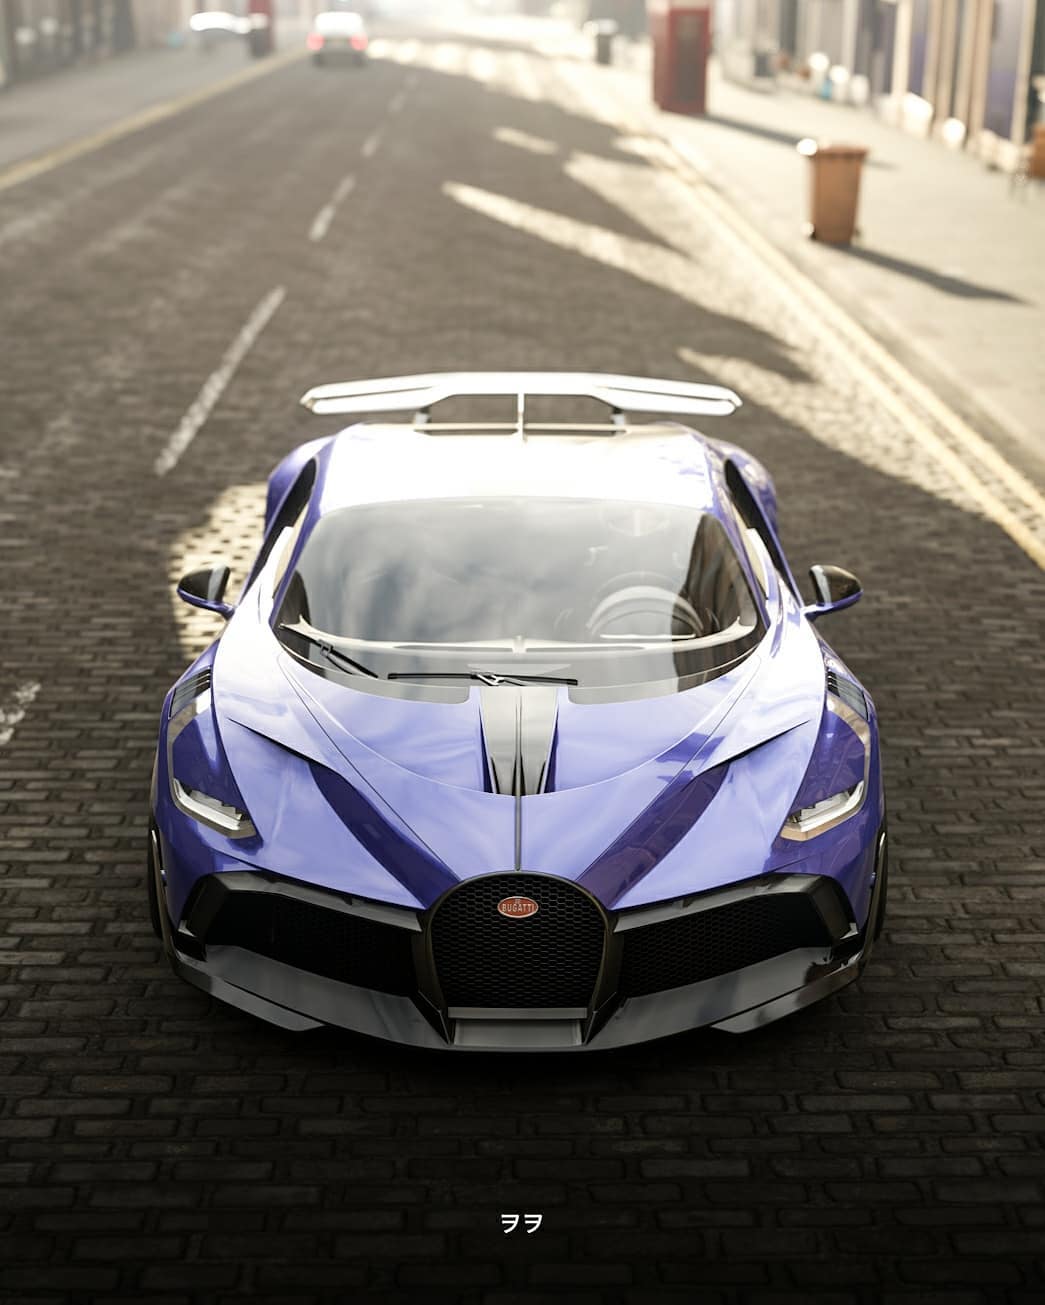 Bugatti Divo Looks Menacing in These Wallpaper-Quality Game Shots